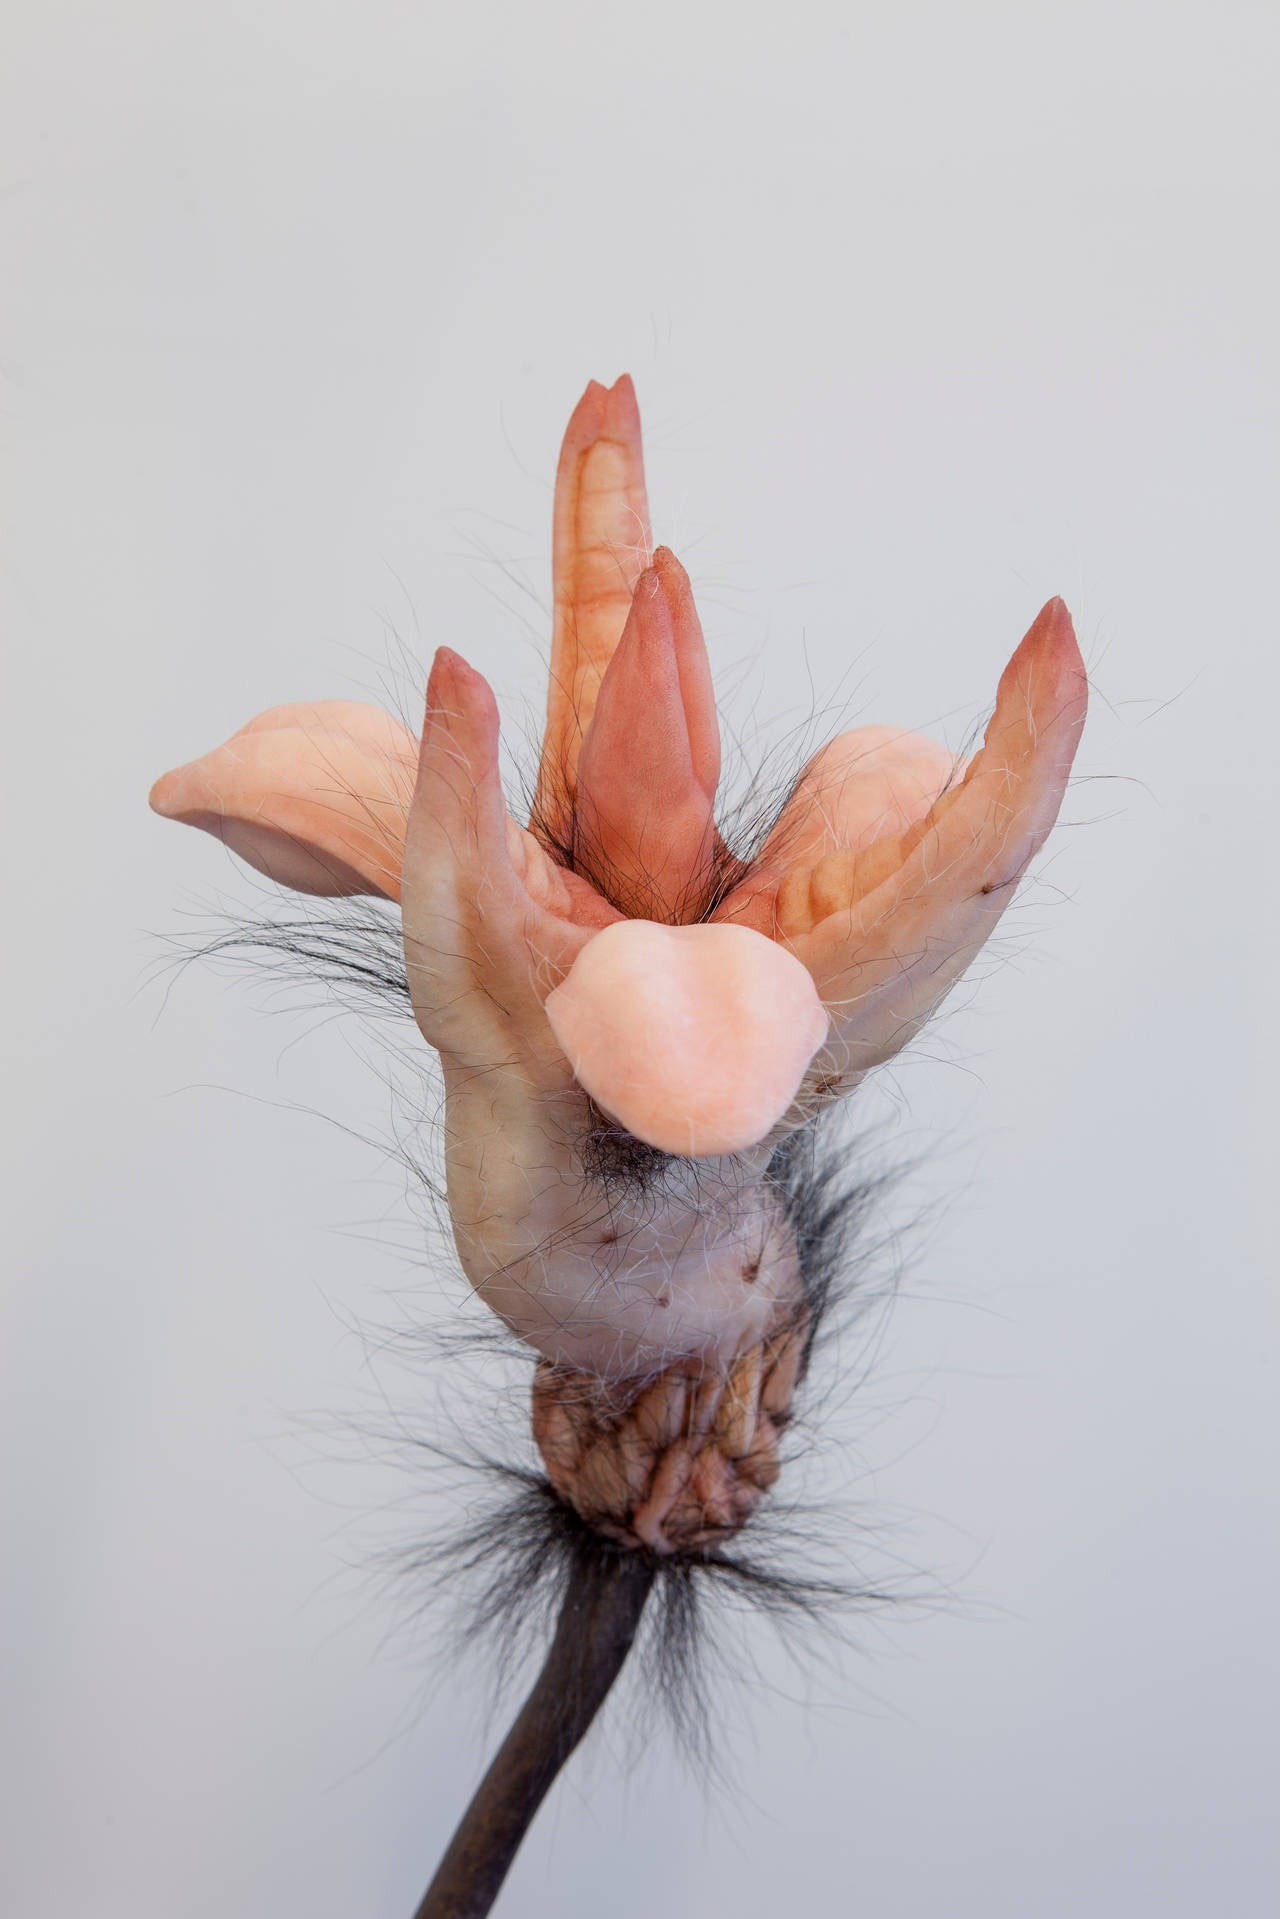 Metaflora (Twin Rivers Mouth) - Contemporary Sculpture by Patricia Piccinini